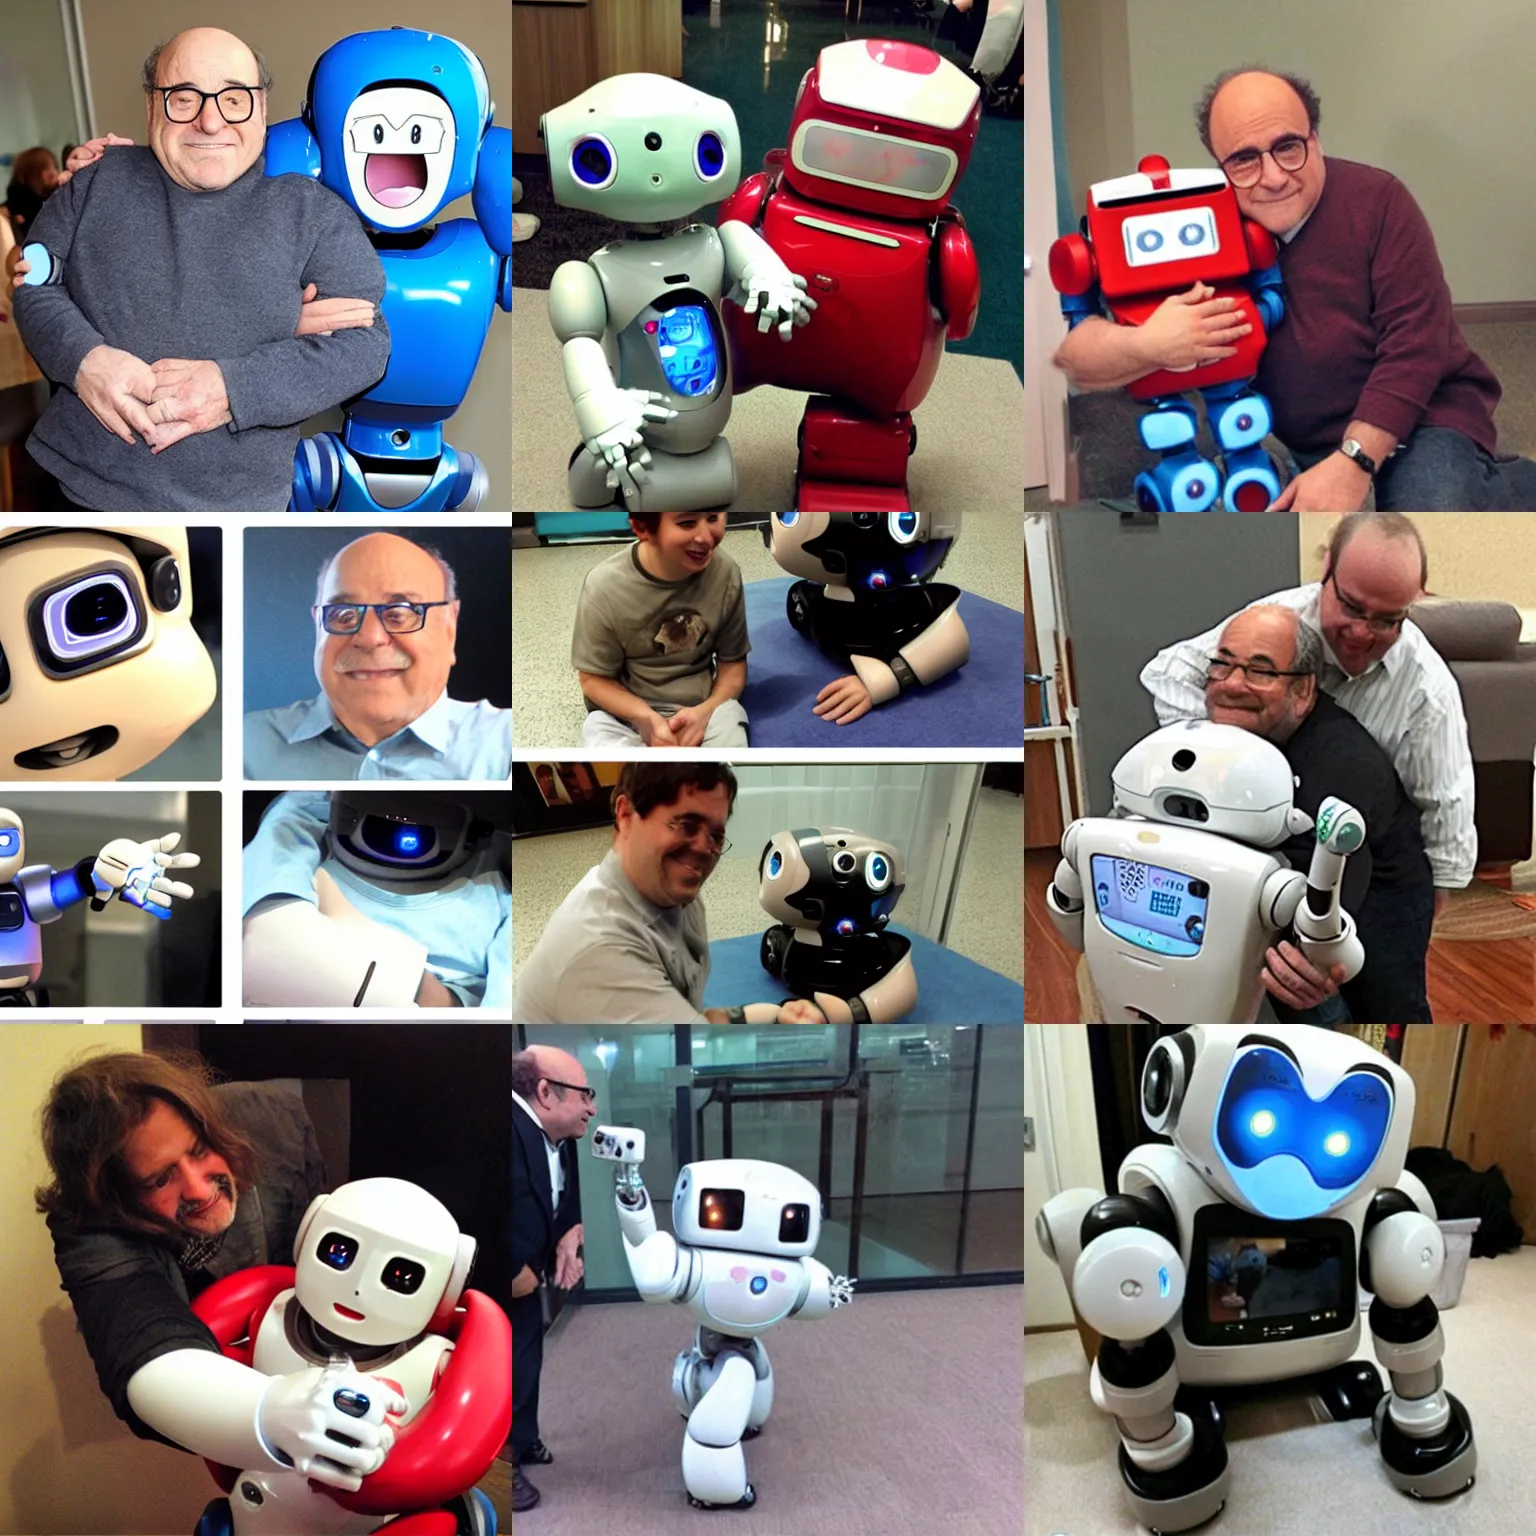 Prompt: <picture meta='attention-grabbing' description='cute adorable friendly caring' robotDesires='hug' accurate>Robot meets Danny DeVito<picture>